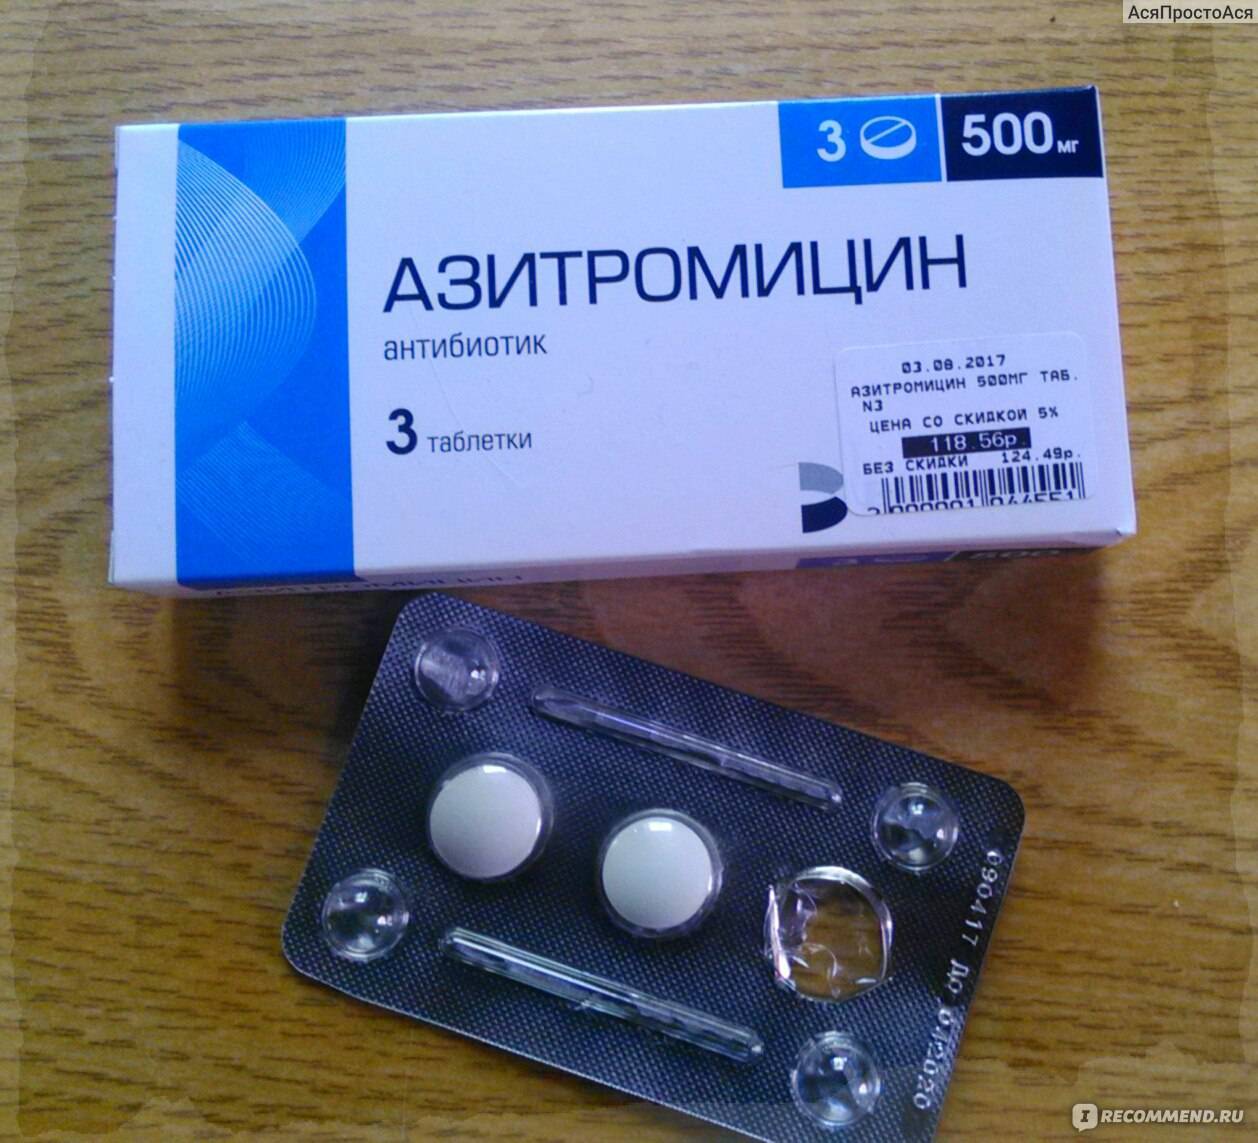 Какие купить антибиотики при простуде взрослому. Антибиотик три таблетки Азитромицин. Таблетки 3 шт антибиотики Азитромицин. Три таблетки от простуды антибиотик Азитромицин. Антибиотик azithromycin 500.